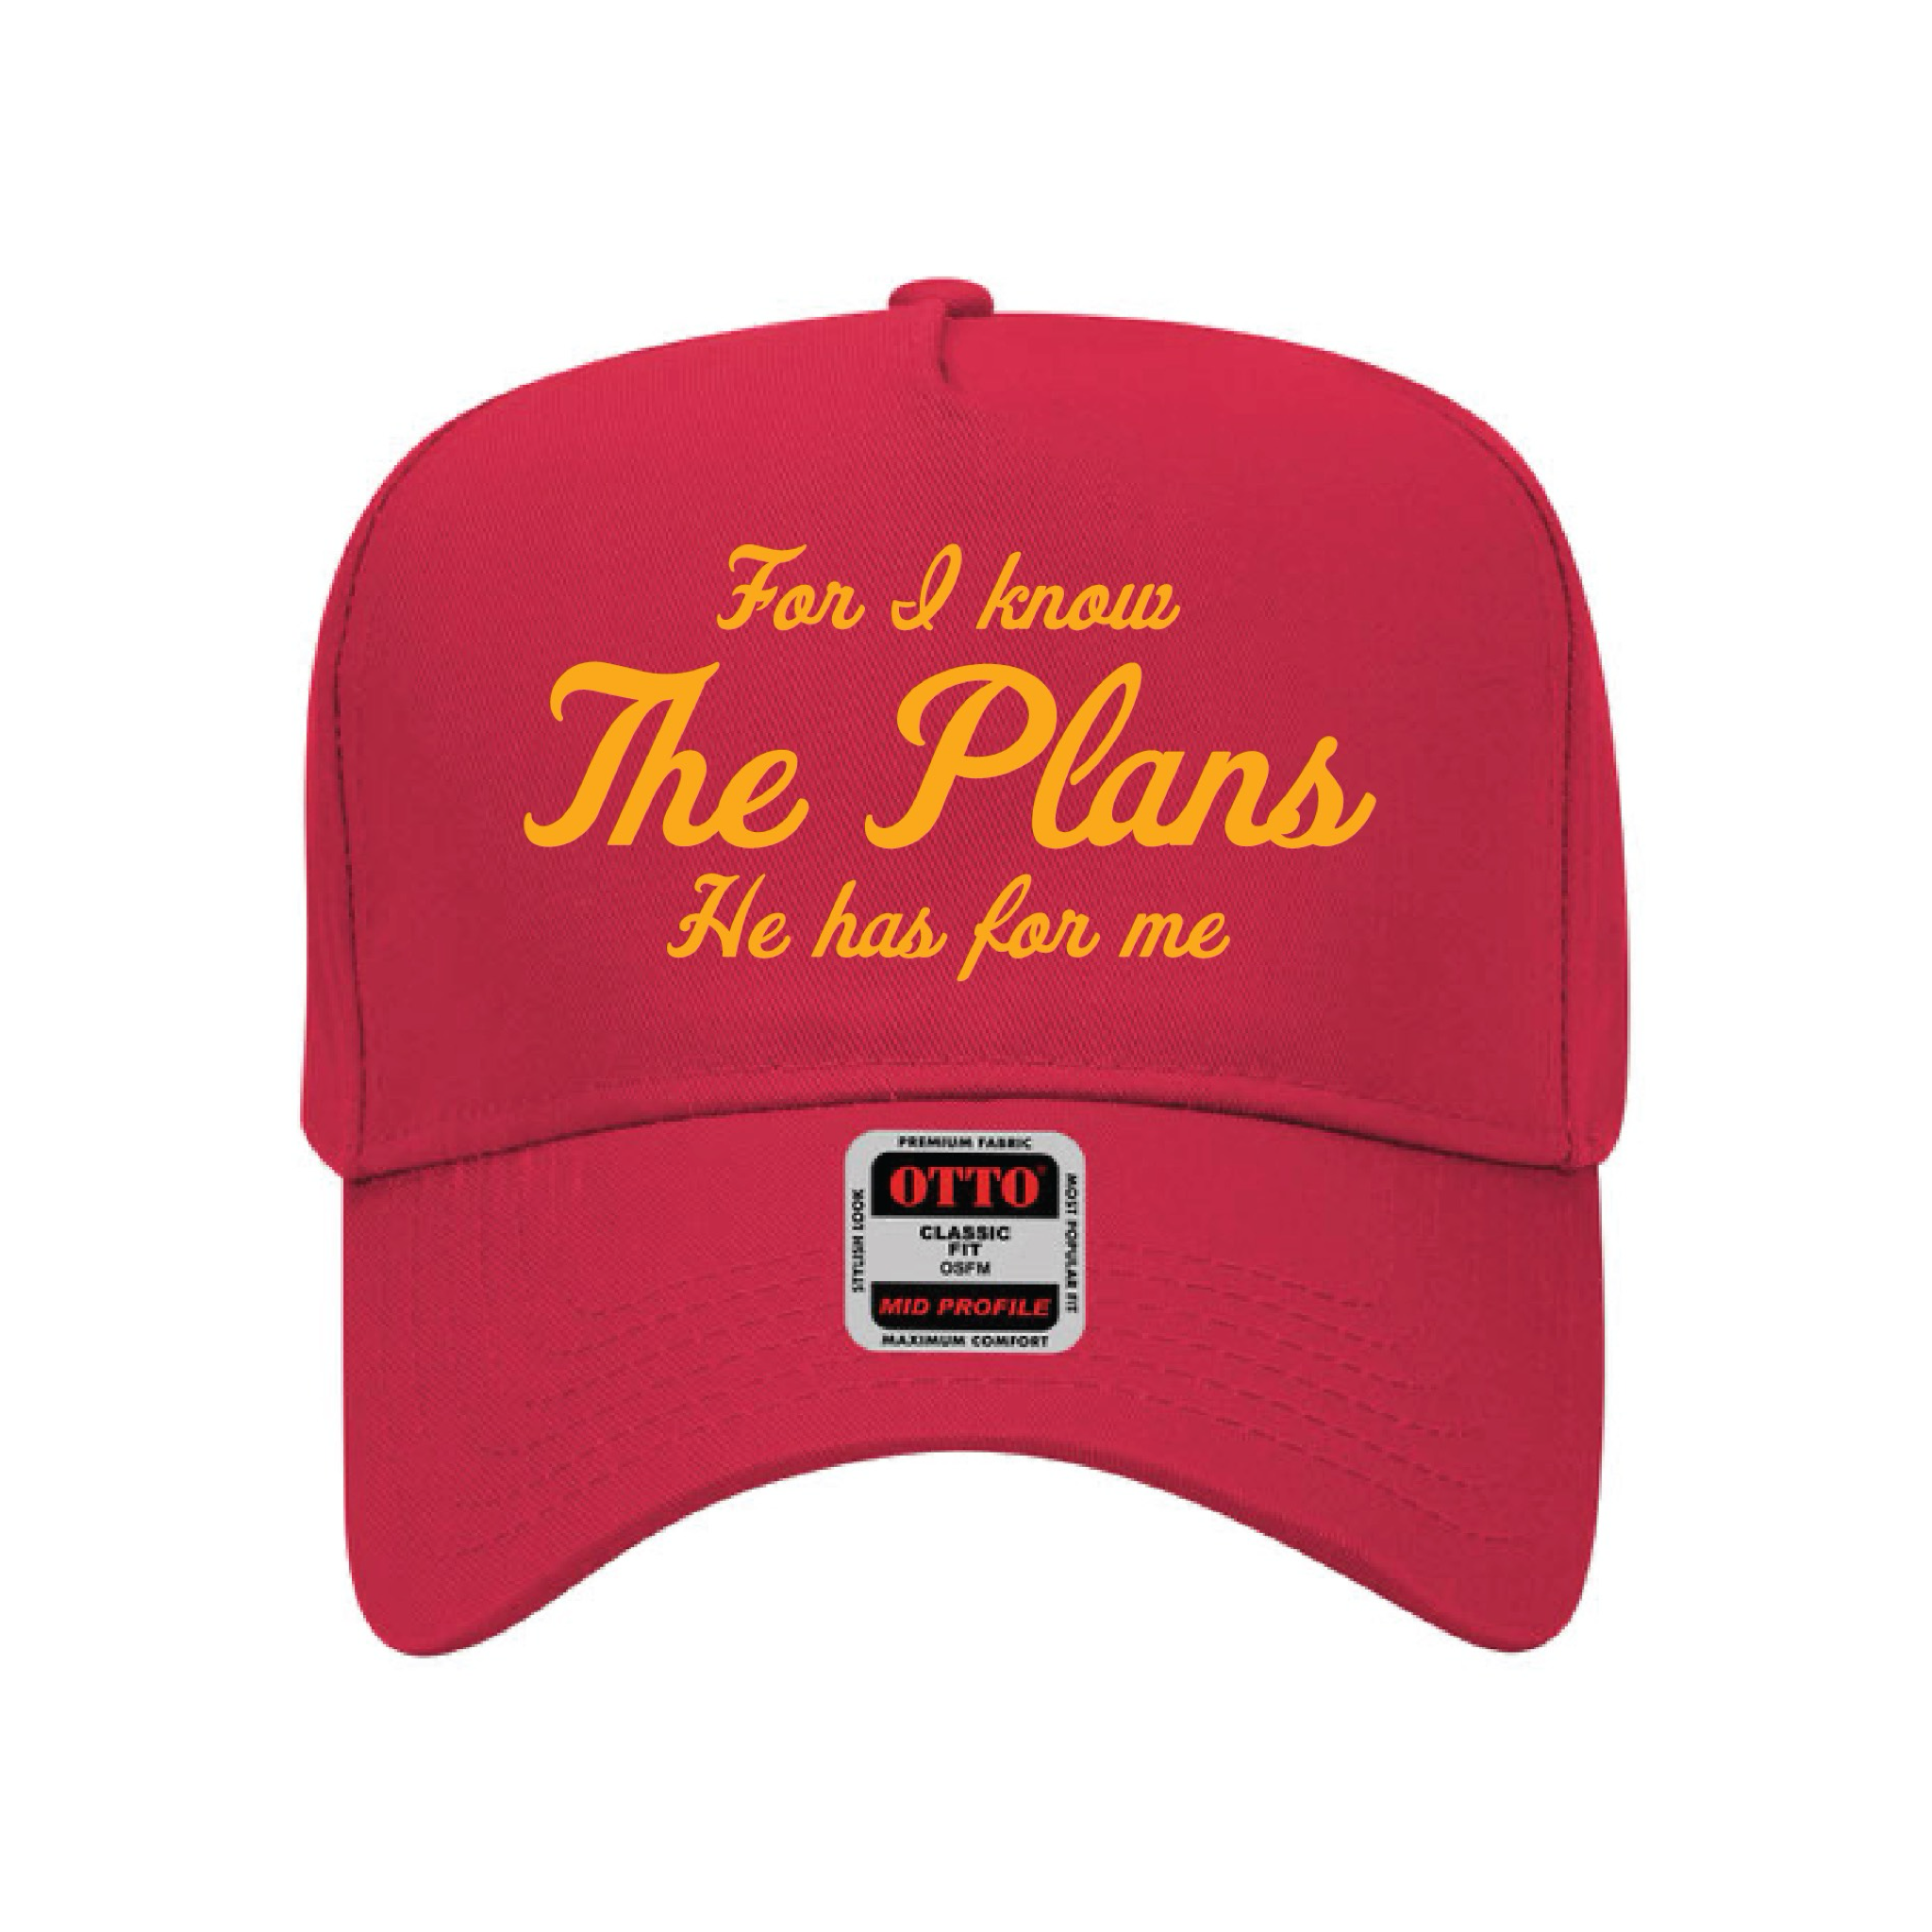 THE PLANS - CLASSIC FIT HAT